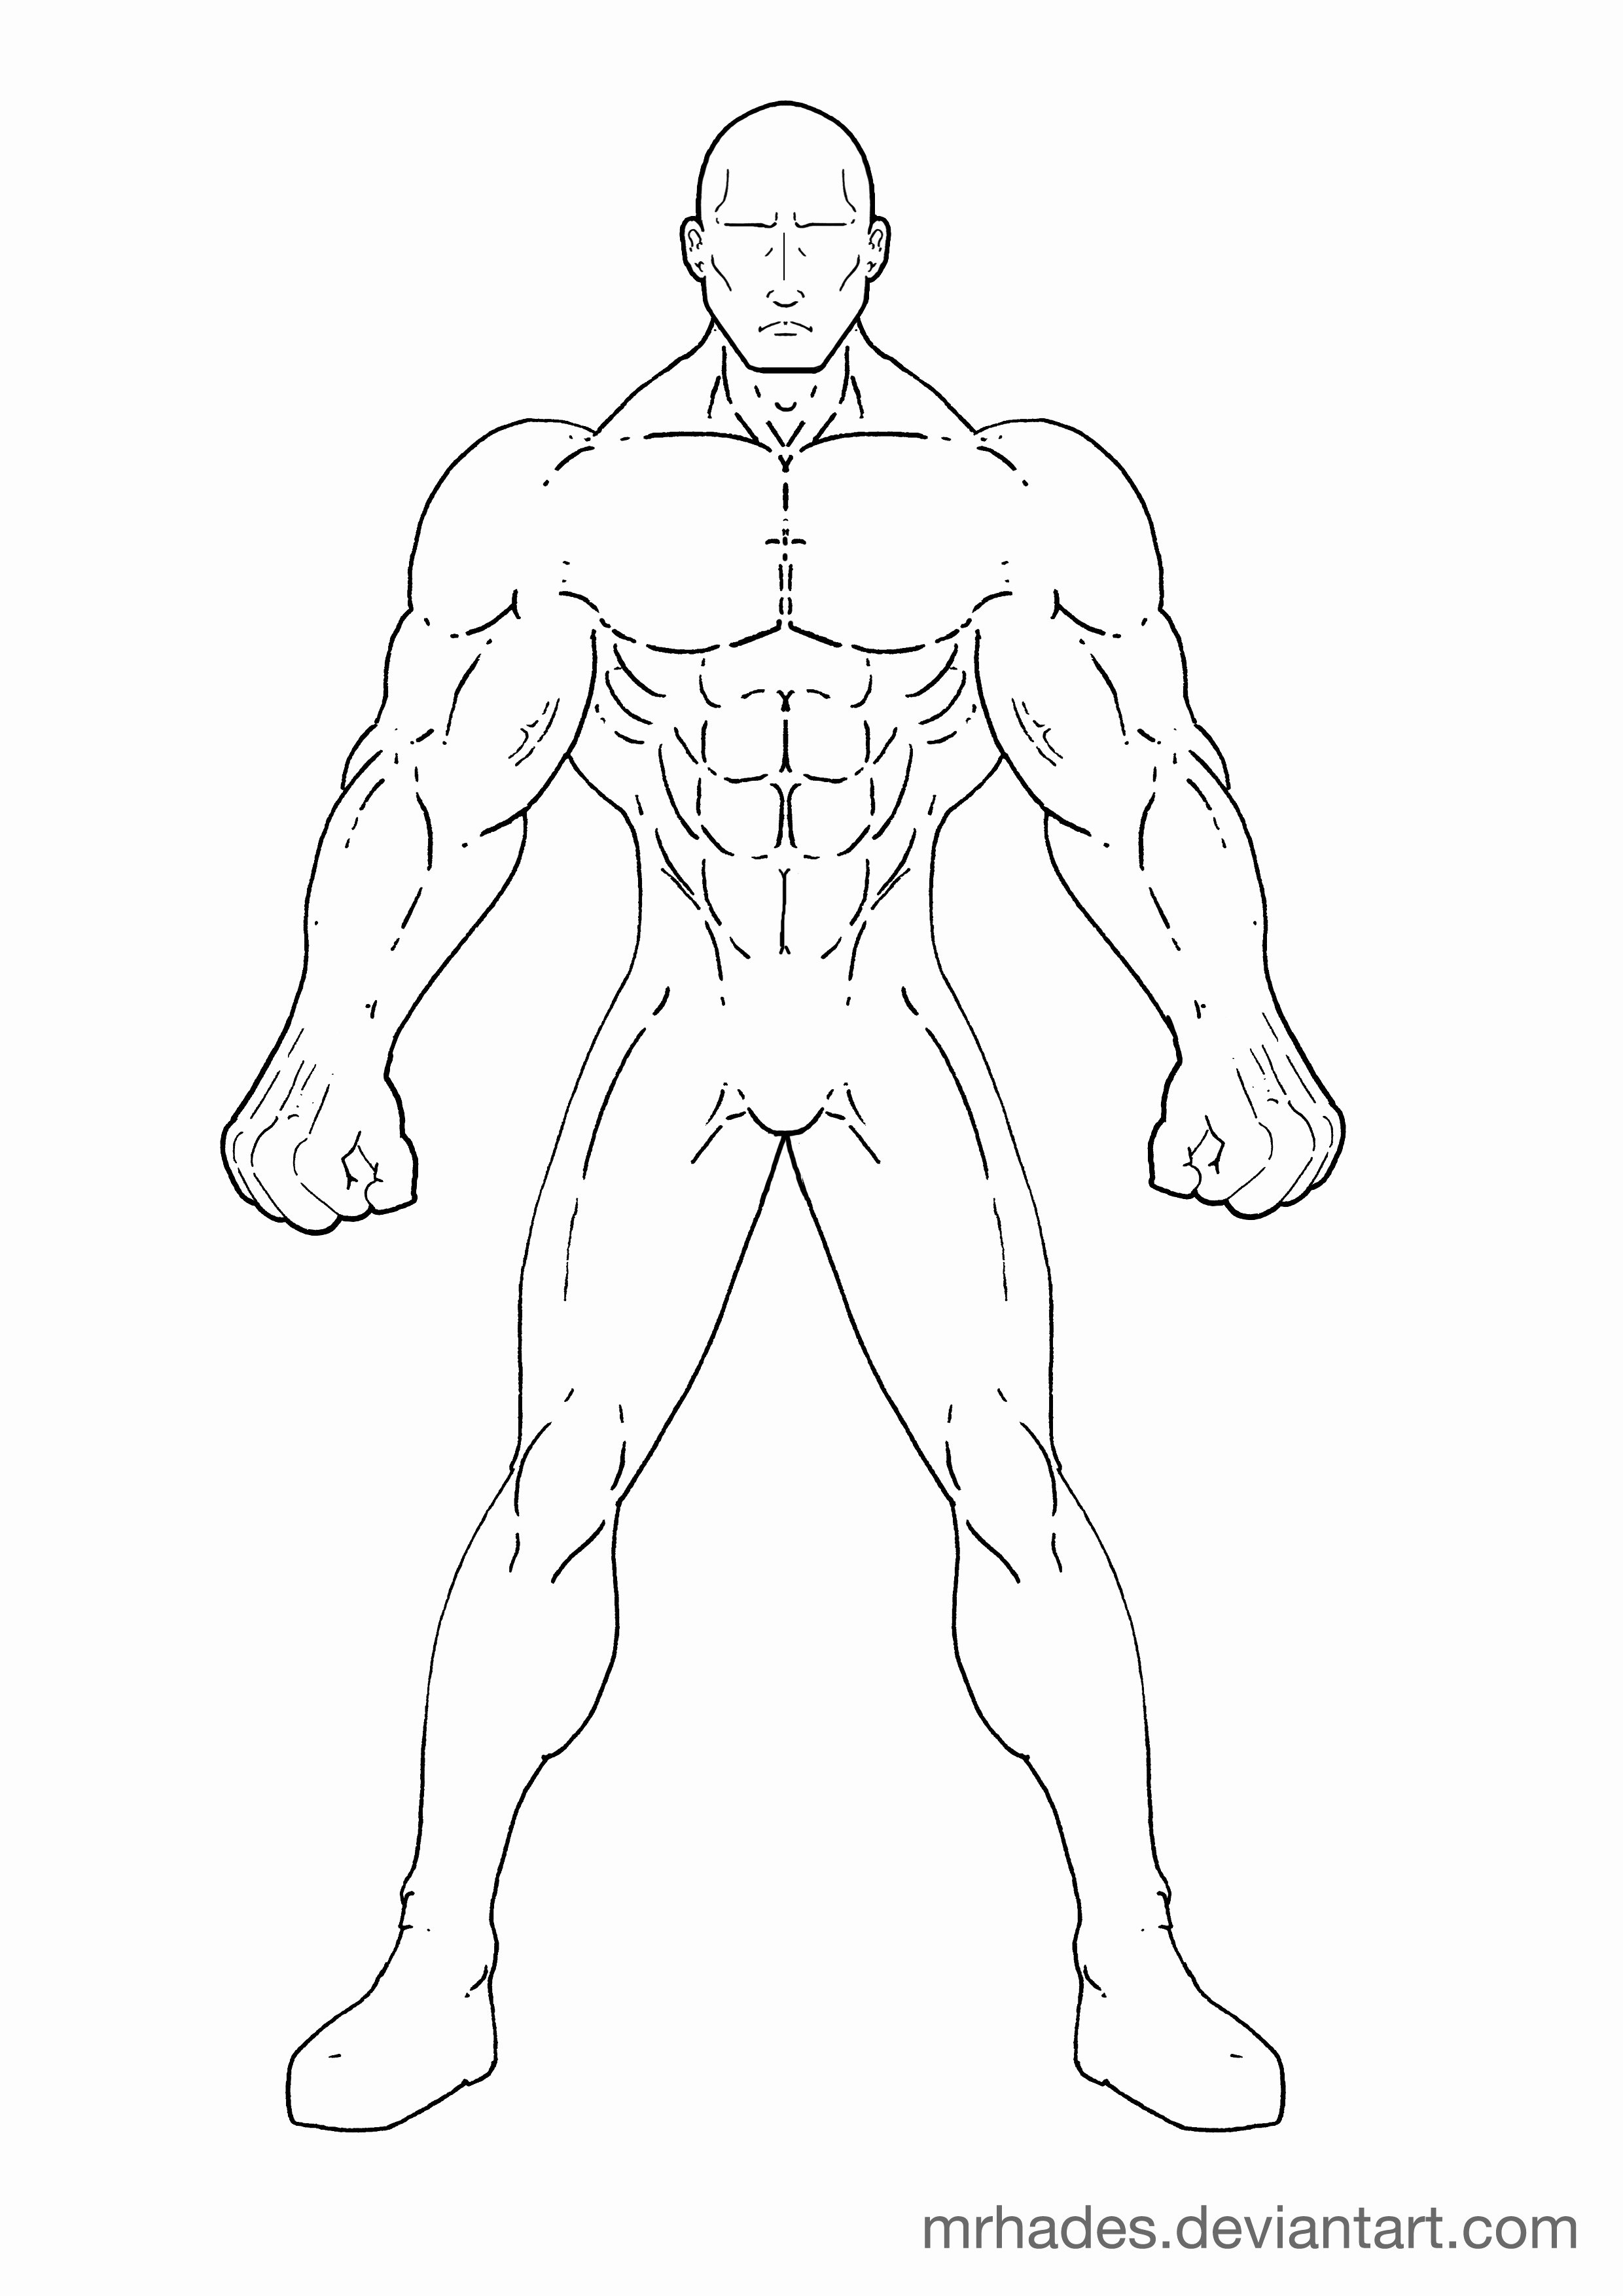 Blank Male Body Template Lovely Blank Superhero Template Drawings Art Gallery